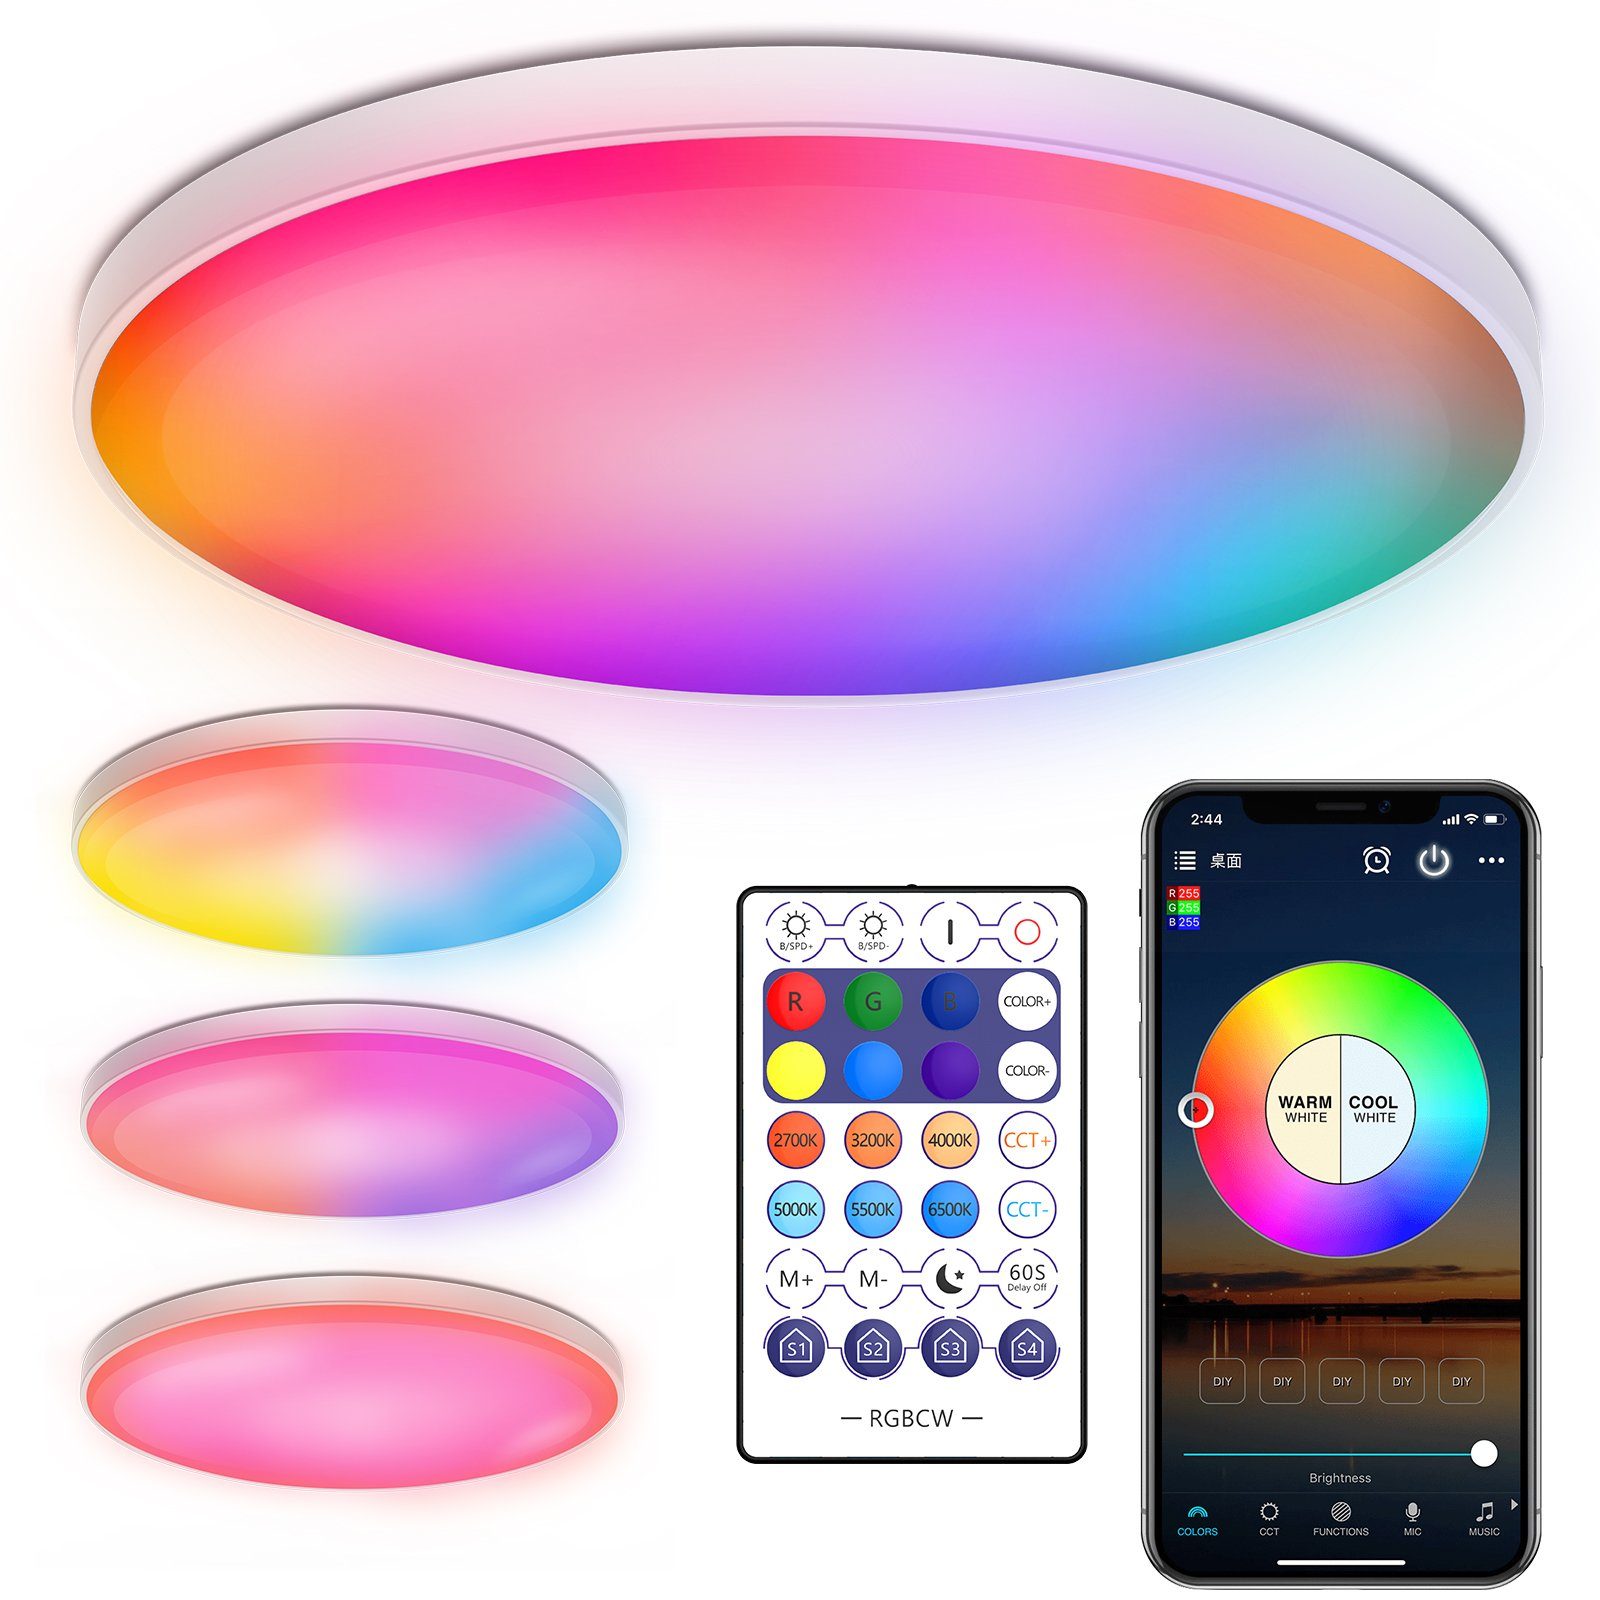 Merry 2024 LED Deckenleuchte Alexa Deckenlampe LED Deckenleuchte,WiFi, Bluetooth,mit Smart Home IFTTT Farbwechsel,30W Dimmbare, WiFi Google